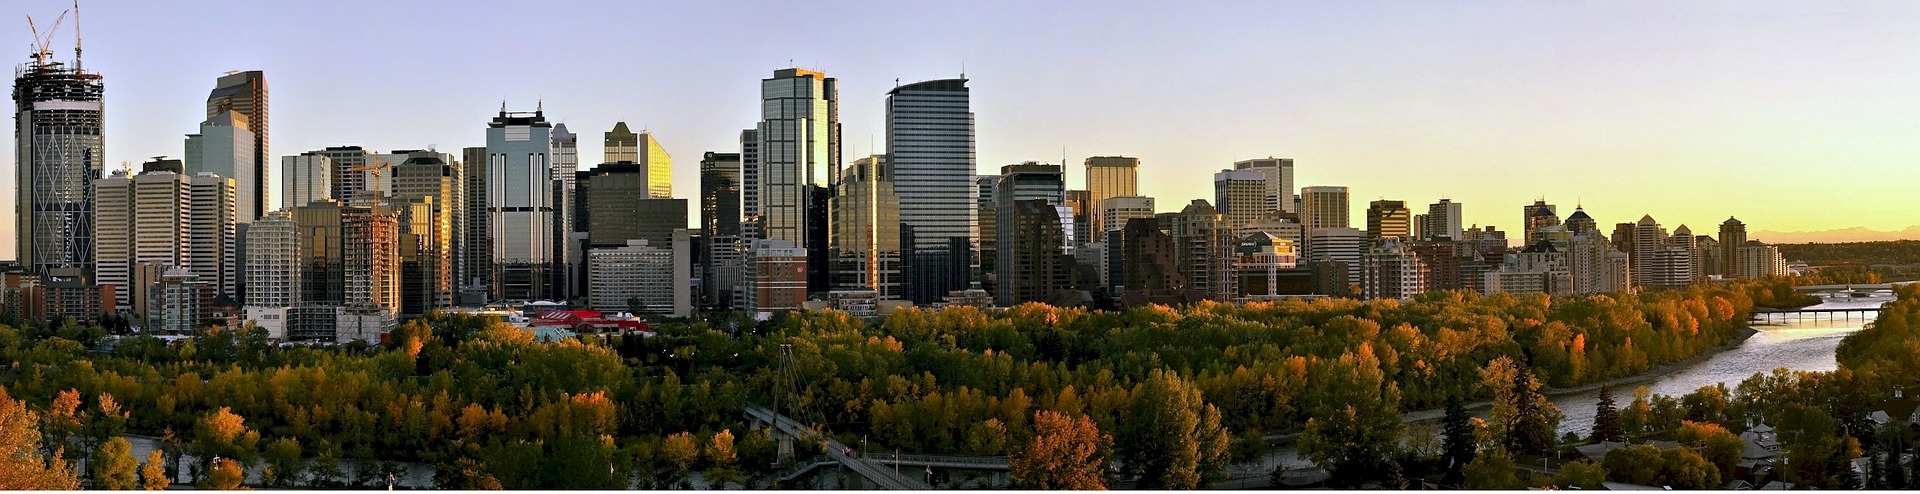 Skyline of Calgary, Canada